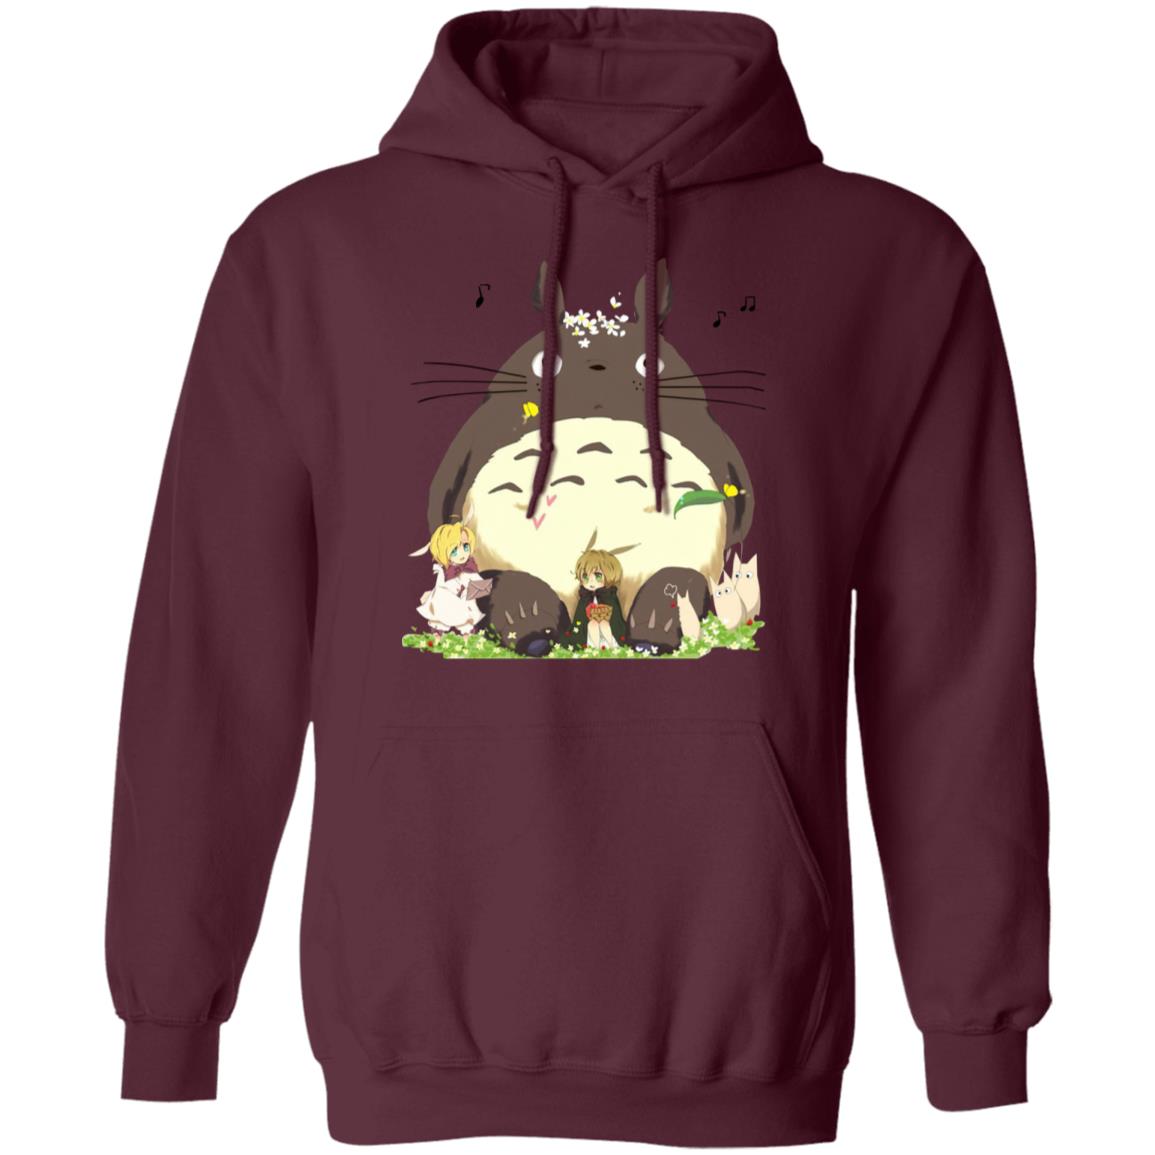 Totoro and the Elves Hoodie